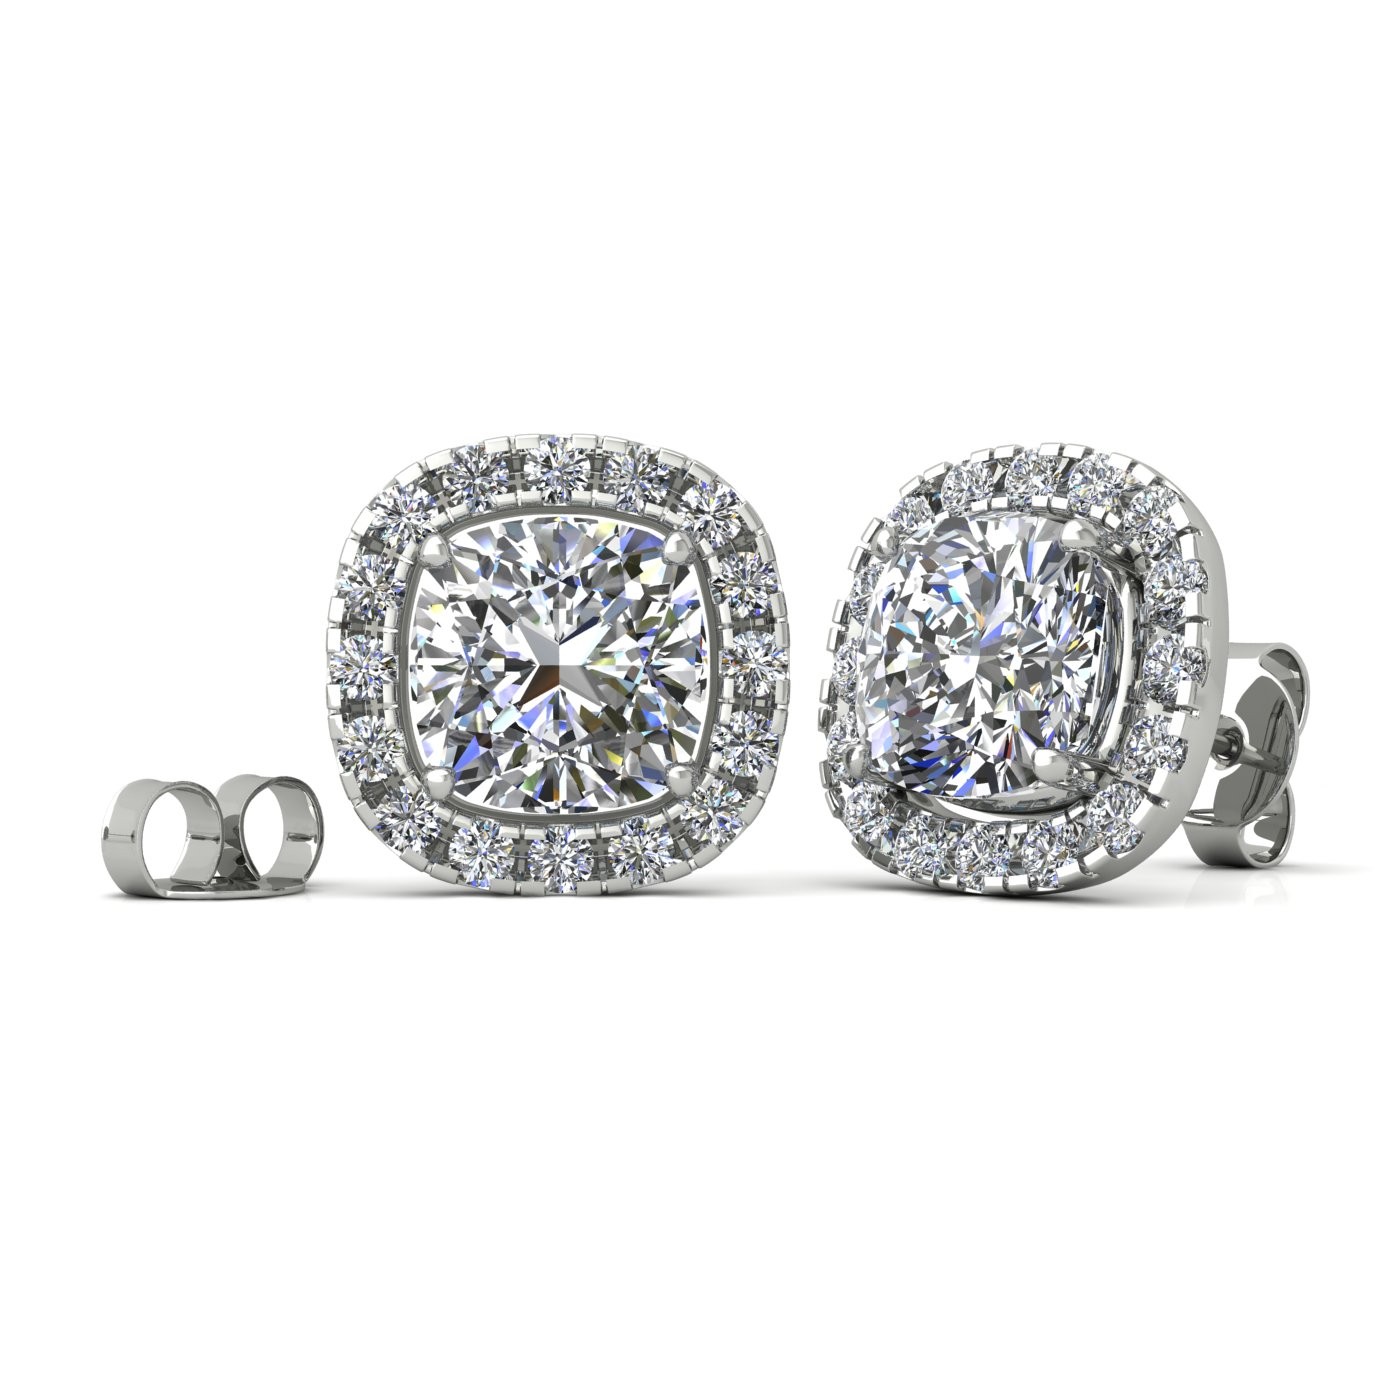 18k white gold  1,5 ct each (3,0 tcw) 4 prongs cushion shape diamond earrings with diamond pavÉ set halo